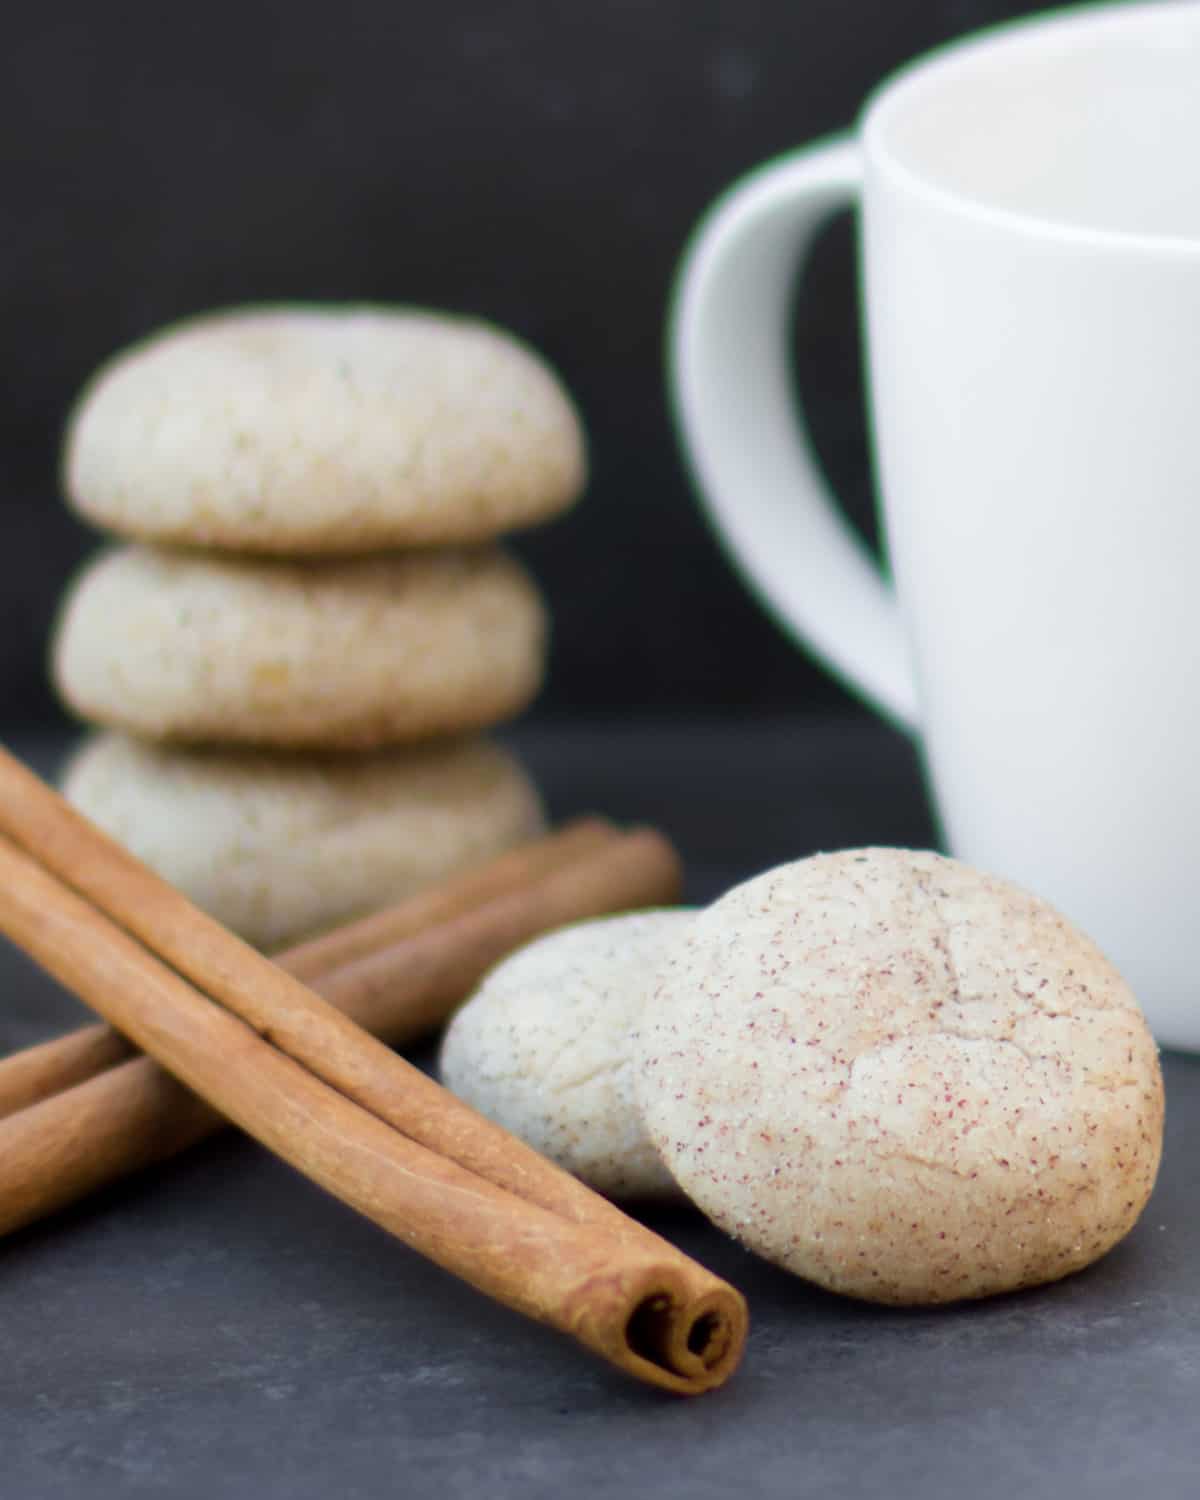 Cookies next to a coffee mug and cinnamon sticks.